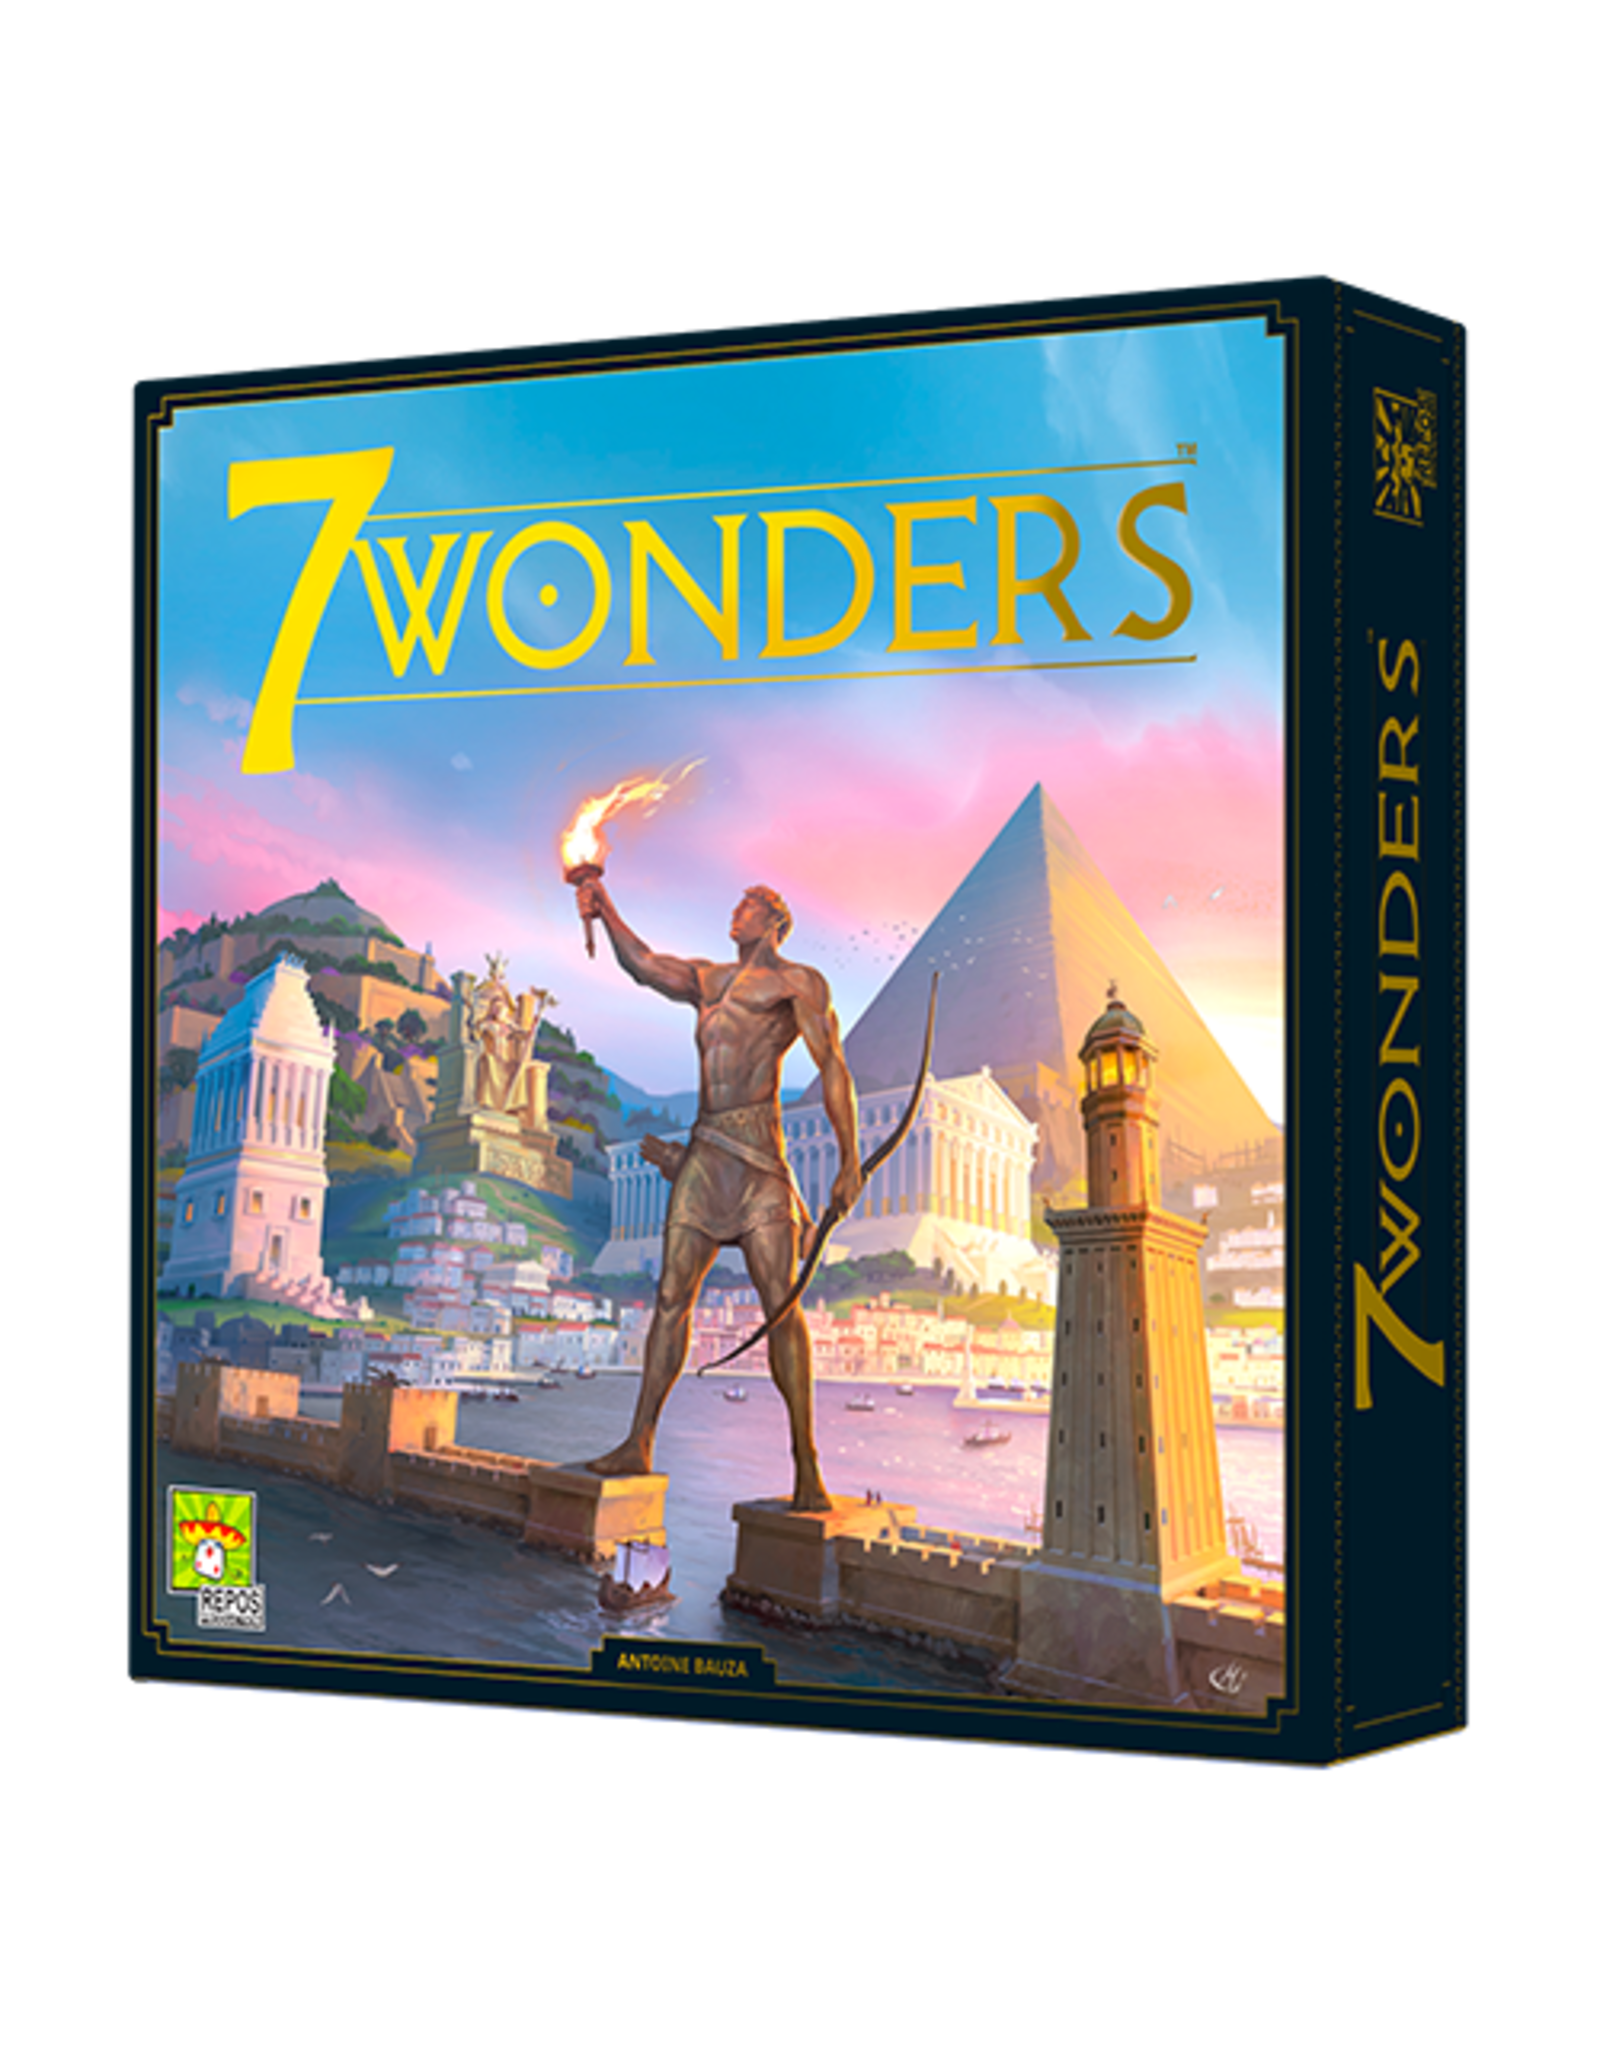 7 Wonders New